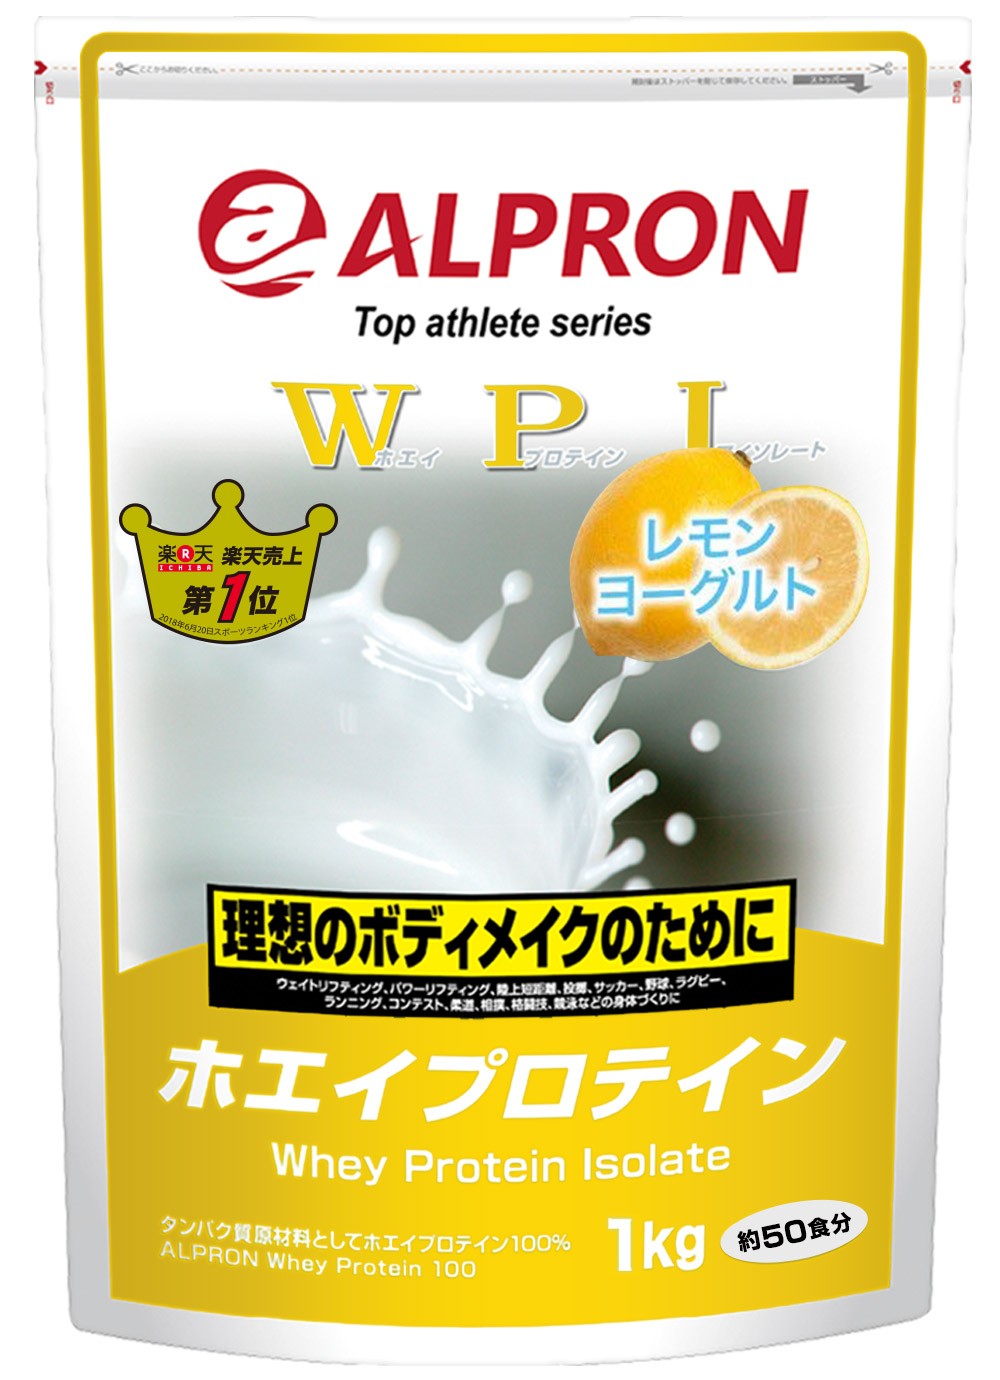 Wpi プロテイン 1kg 3 法人のお客様向けのアルプロン受注窓口です